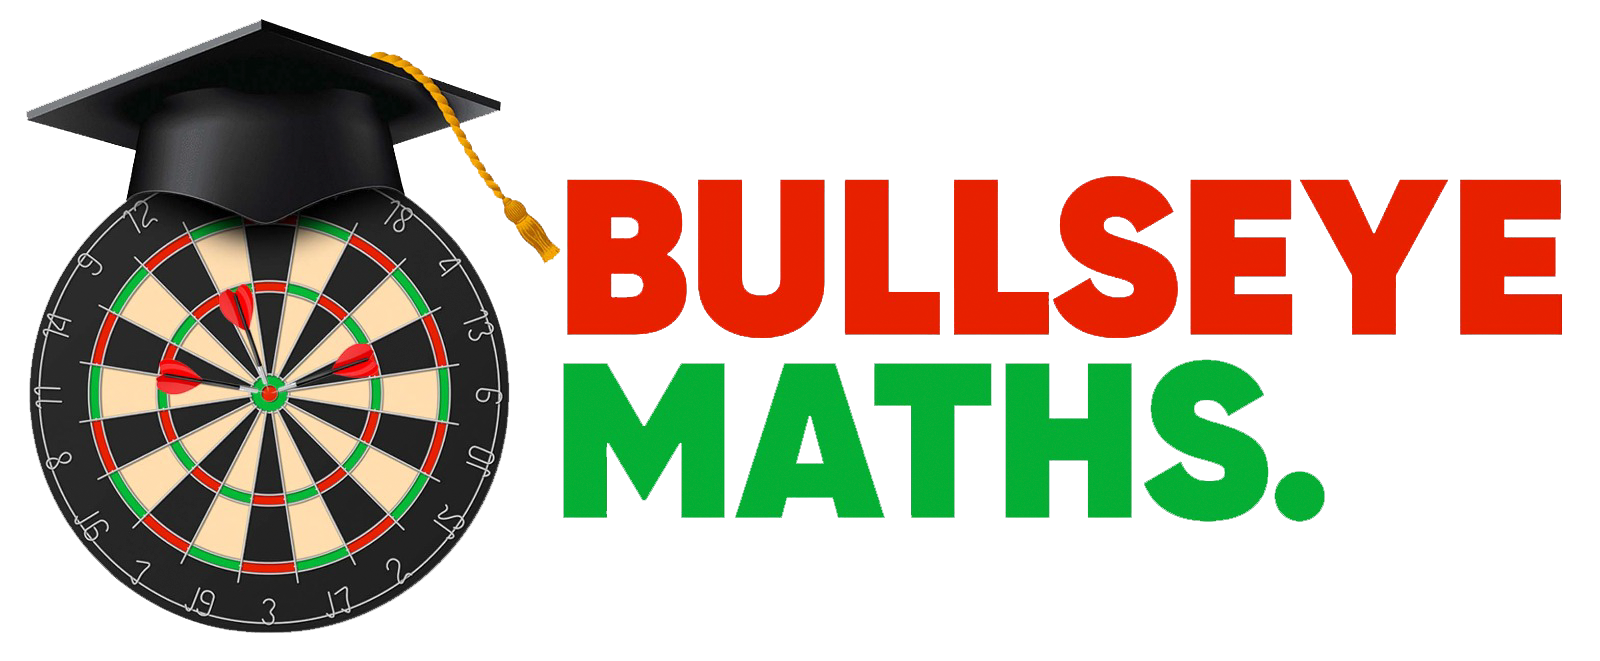 Bullseye Maths